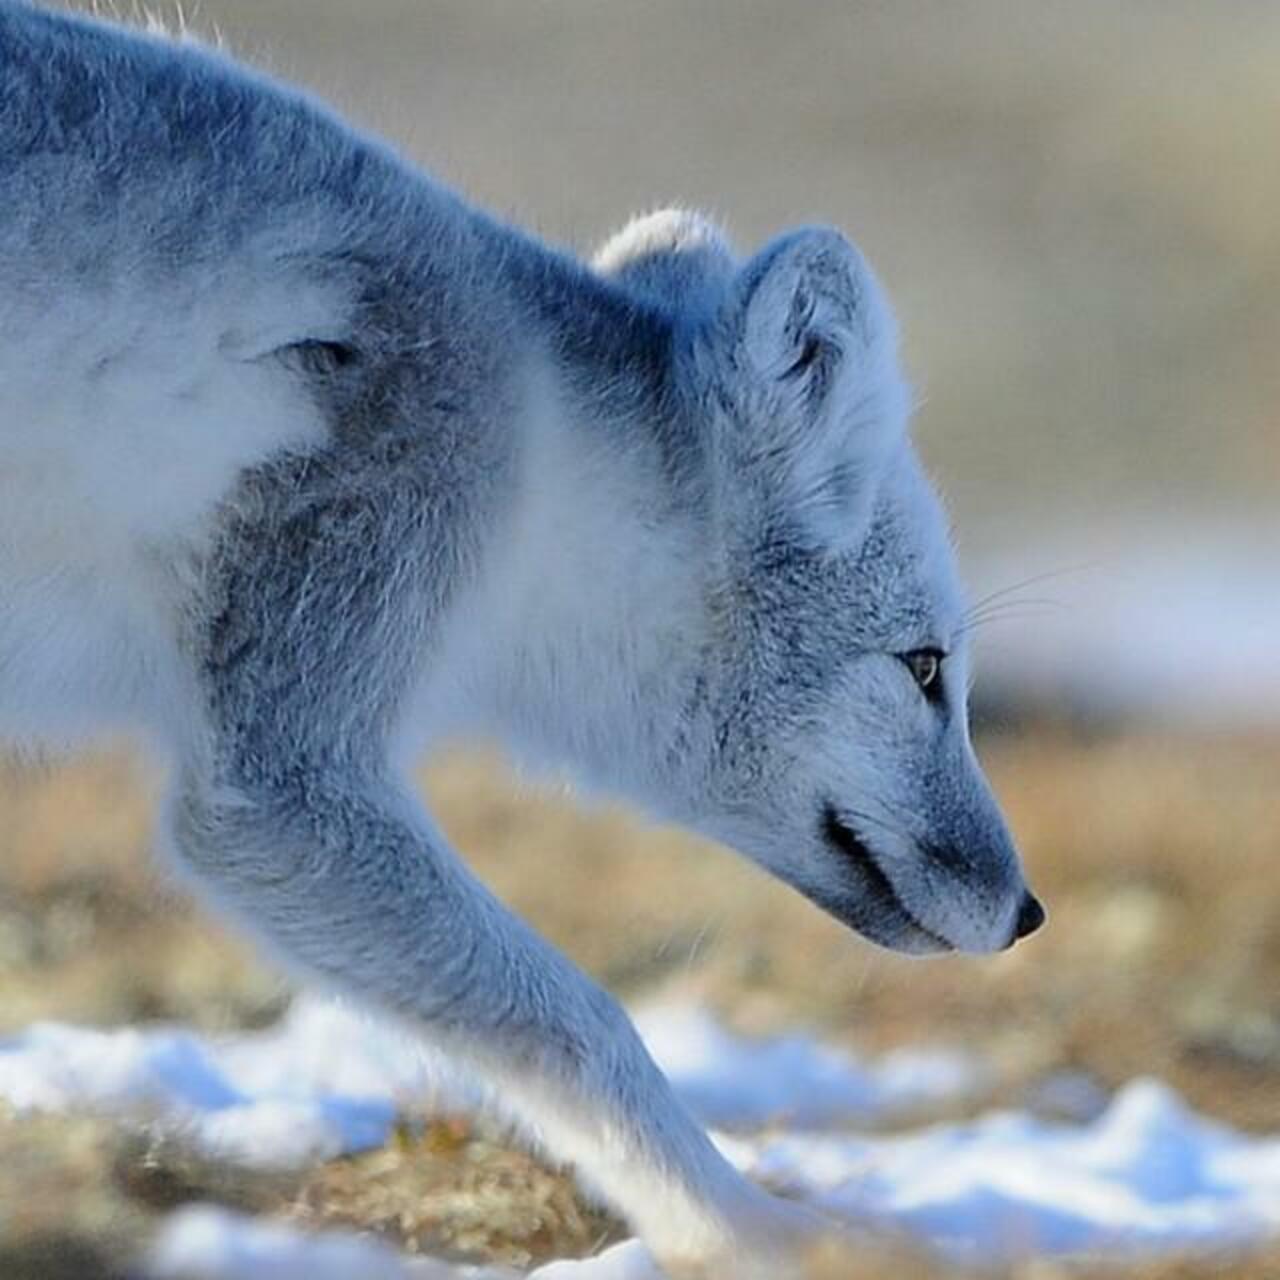 RT @NatlParksPhotos: Artic Fox
#dannysphoto #gallery #animals #articfox #nikon #norway #ilovenorway #ilovenature #wildanimals #wildlife … http://t.co/FL0sTXYHEr